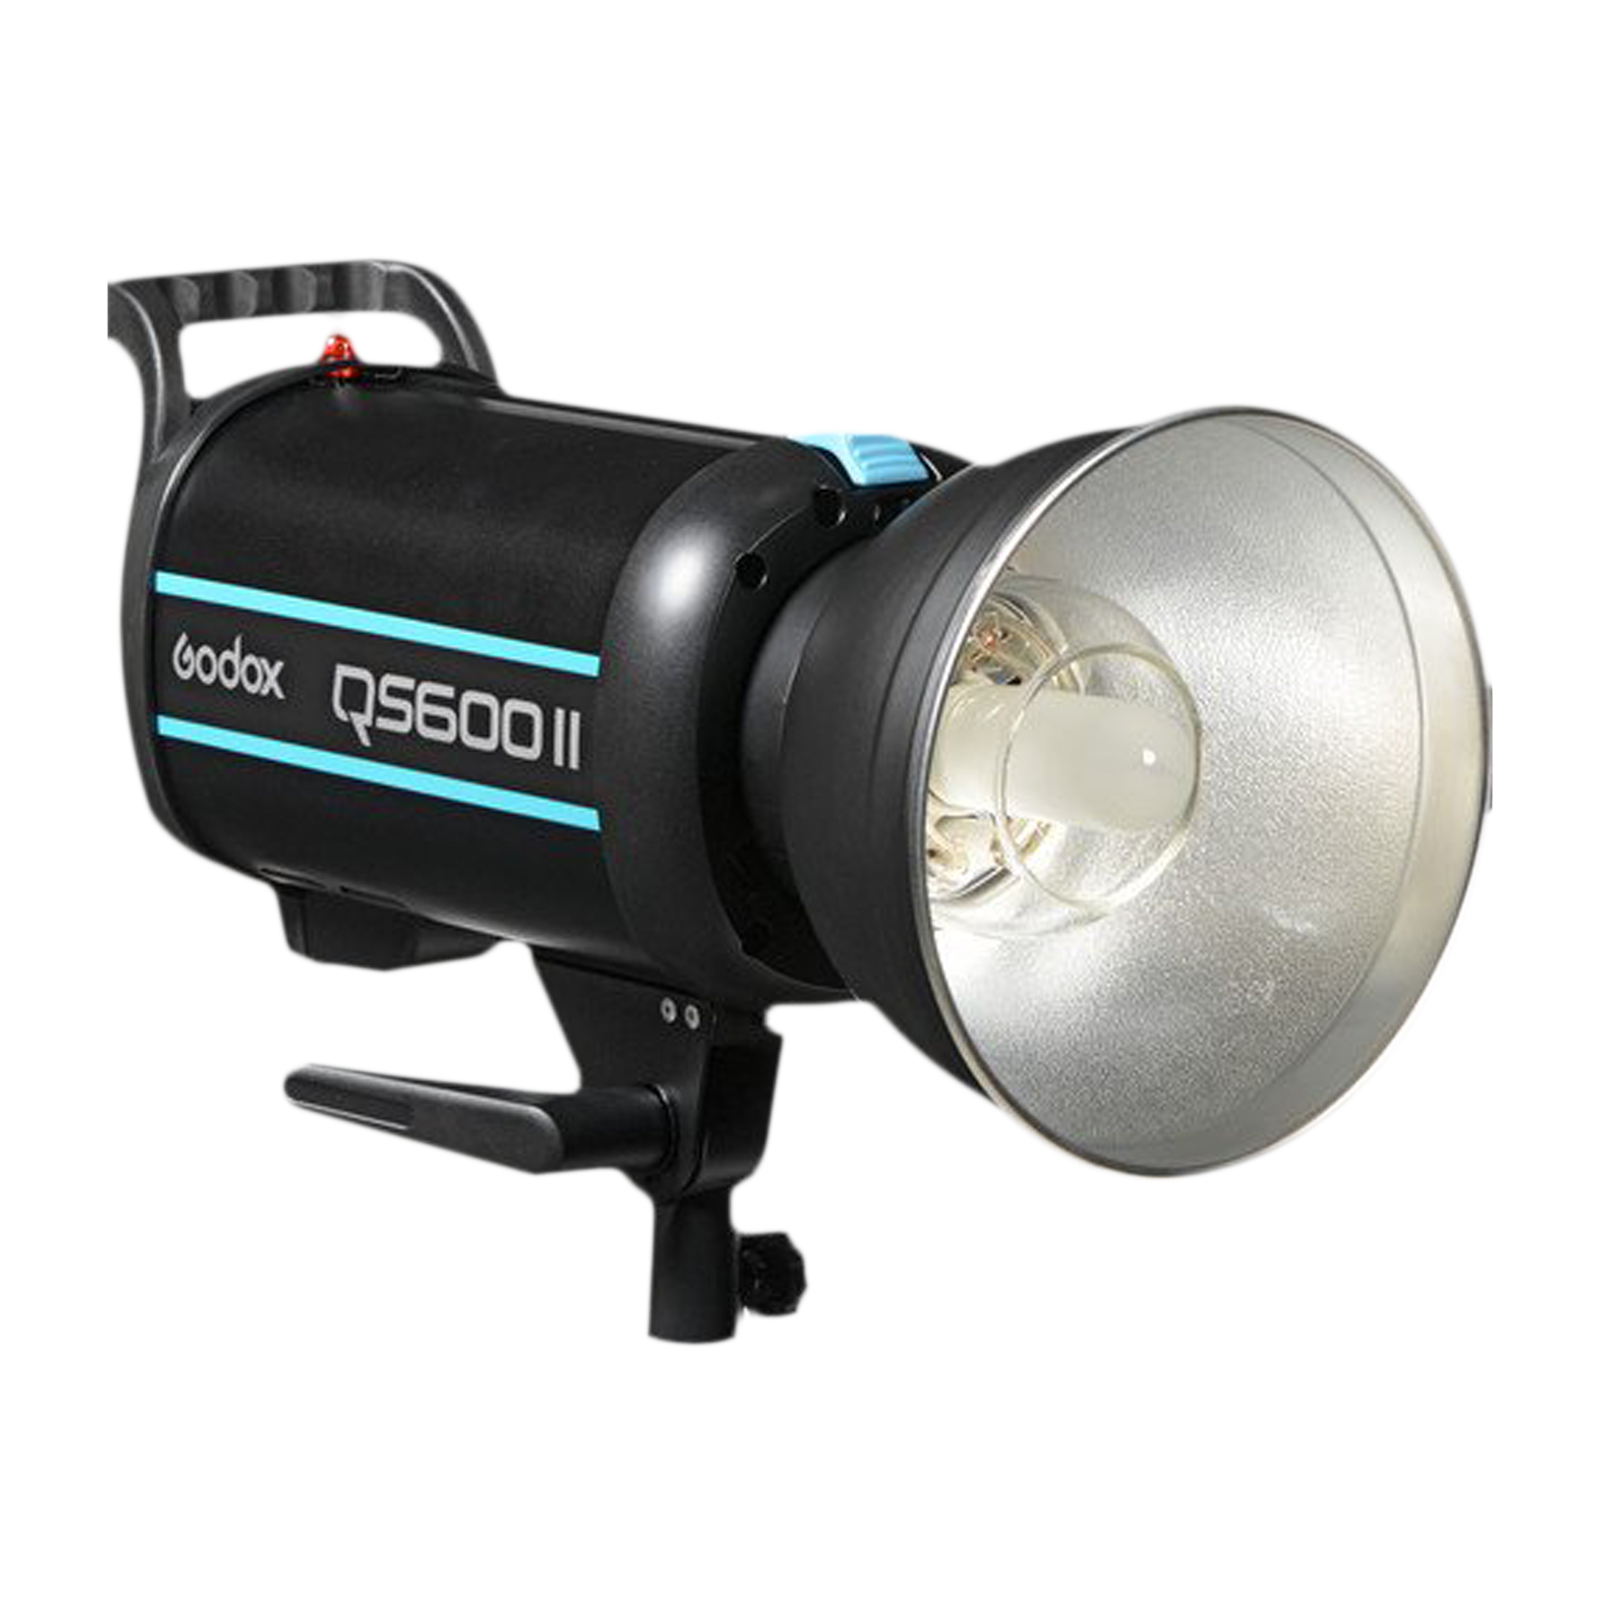 Godox QE600II Flash Light (Abundant Function)